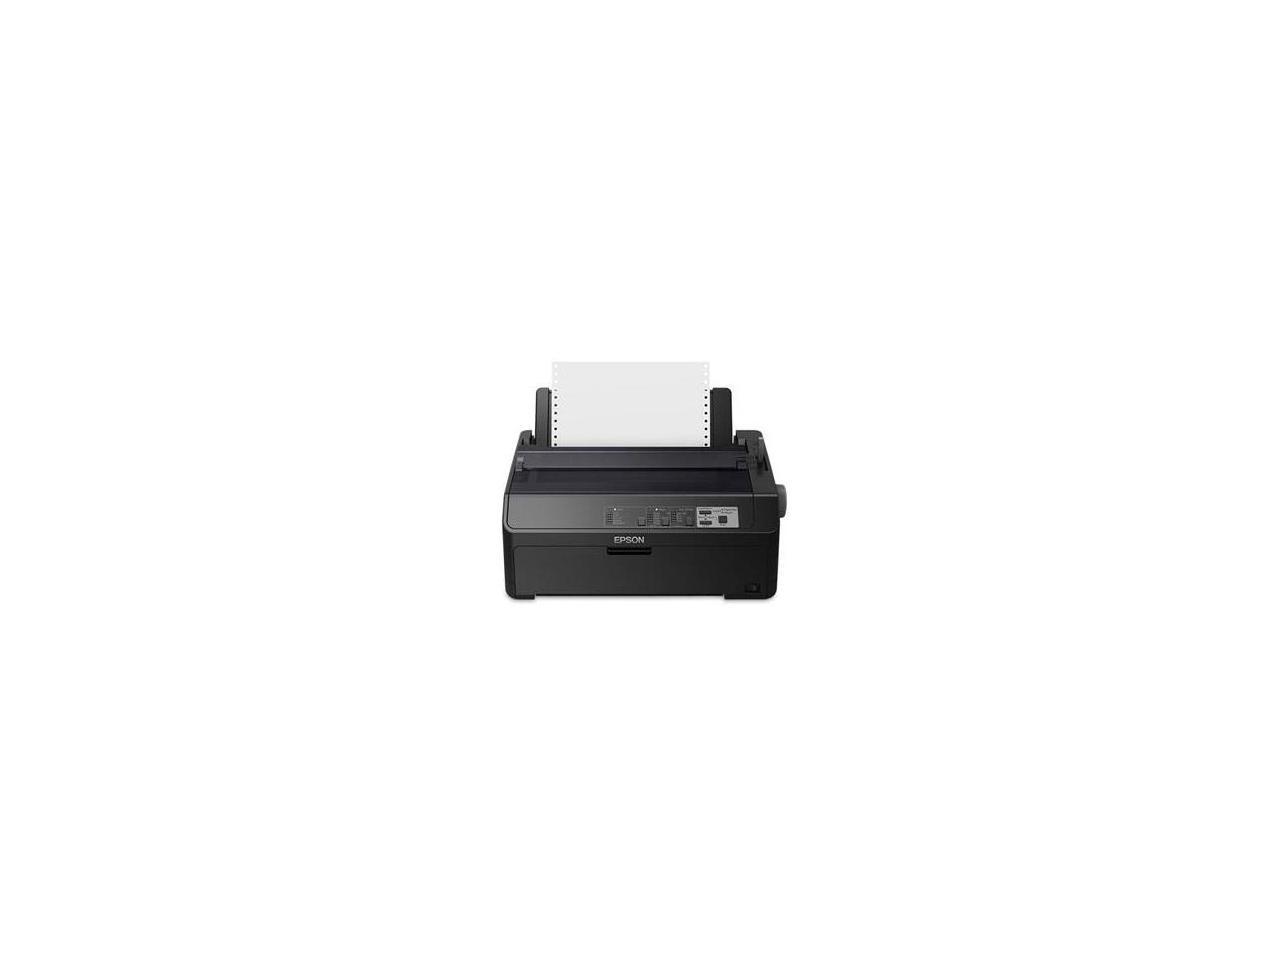 EPSON C11CF37201 FX-890II Impact Printer